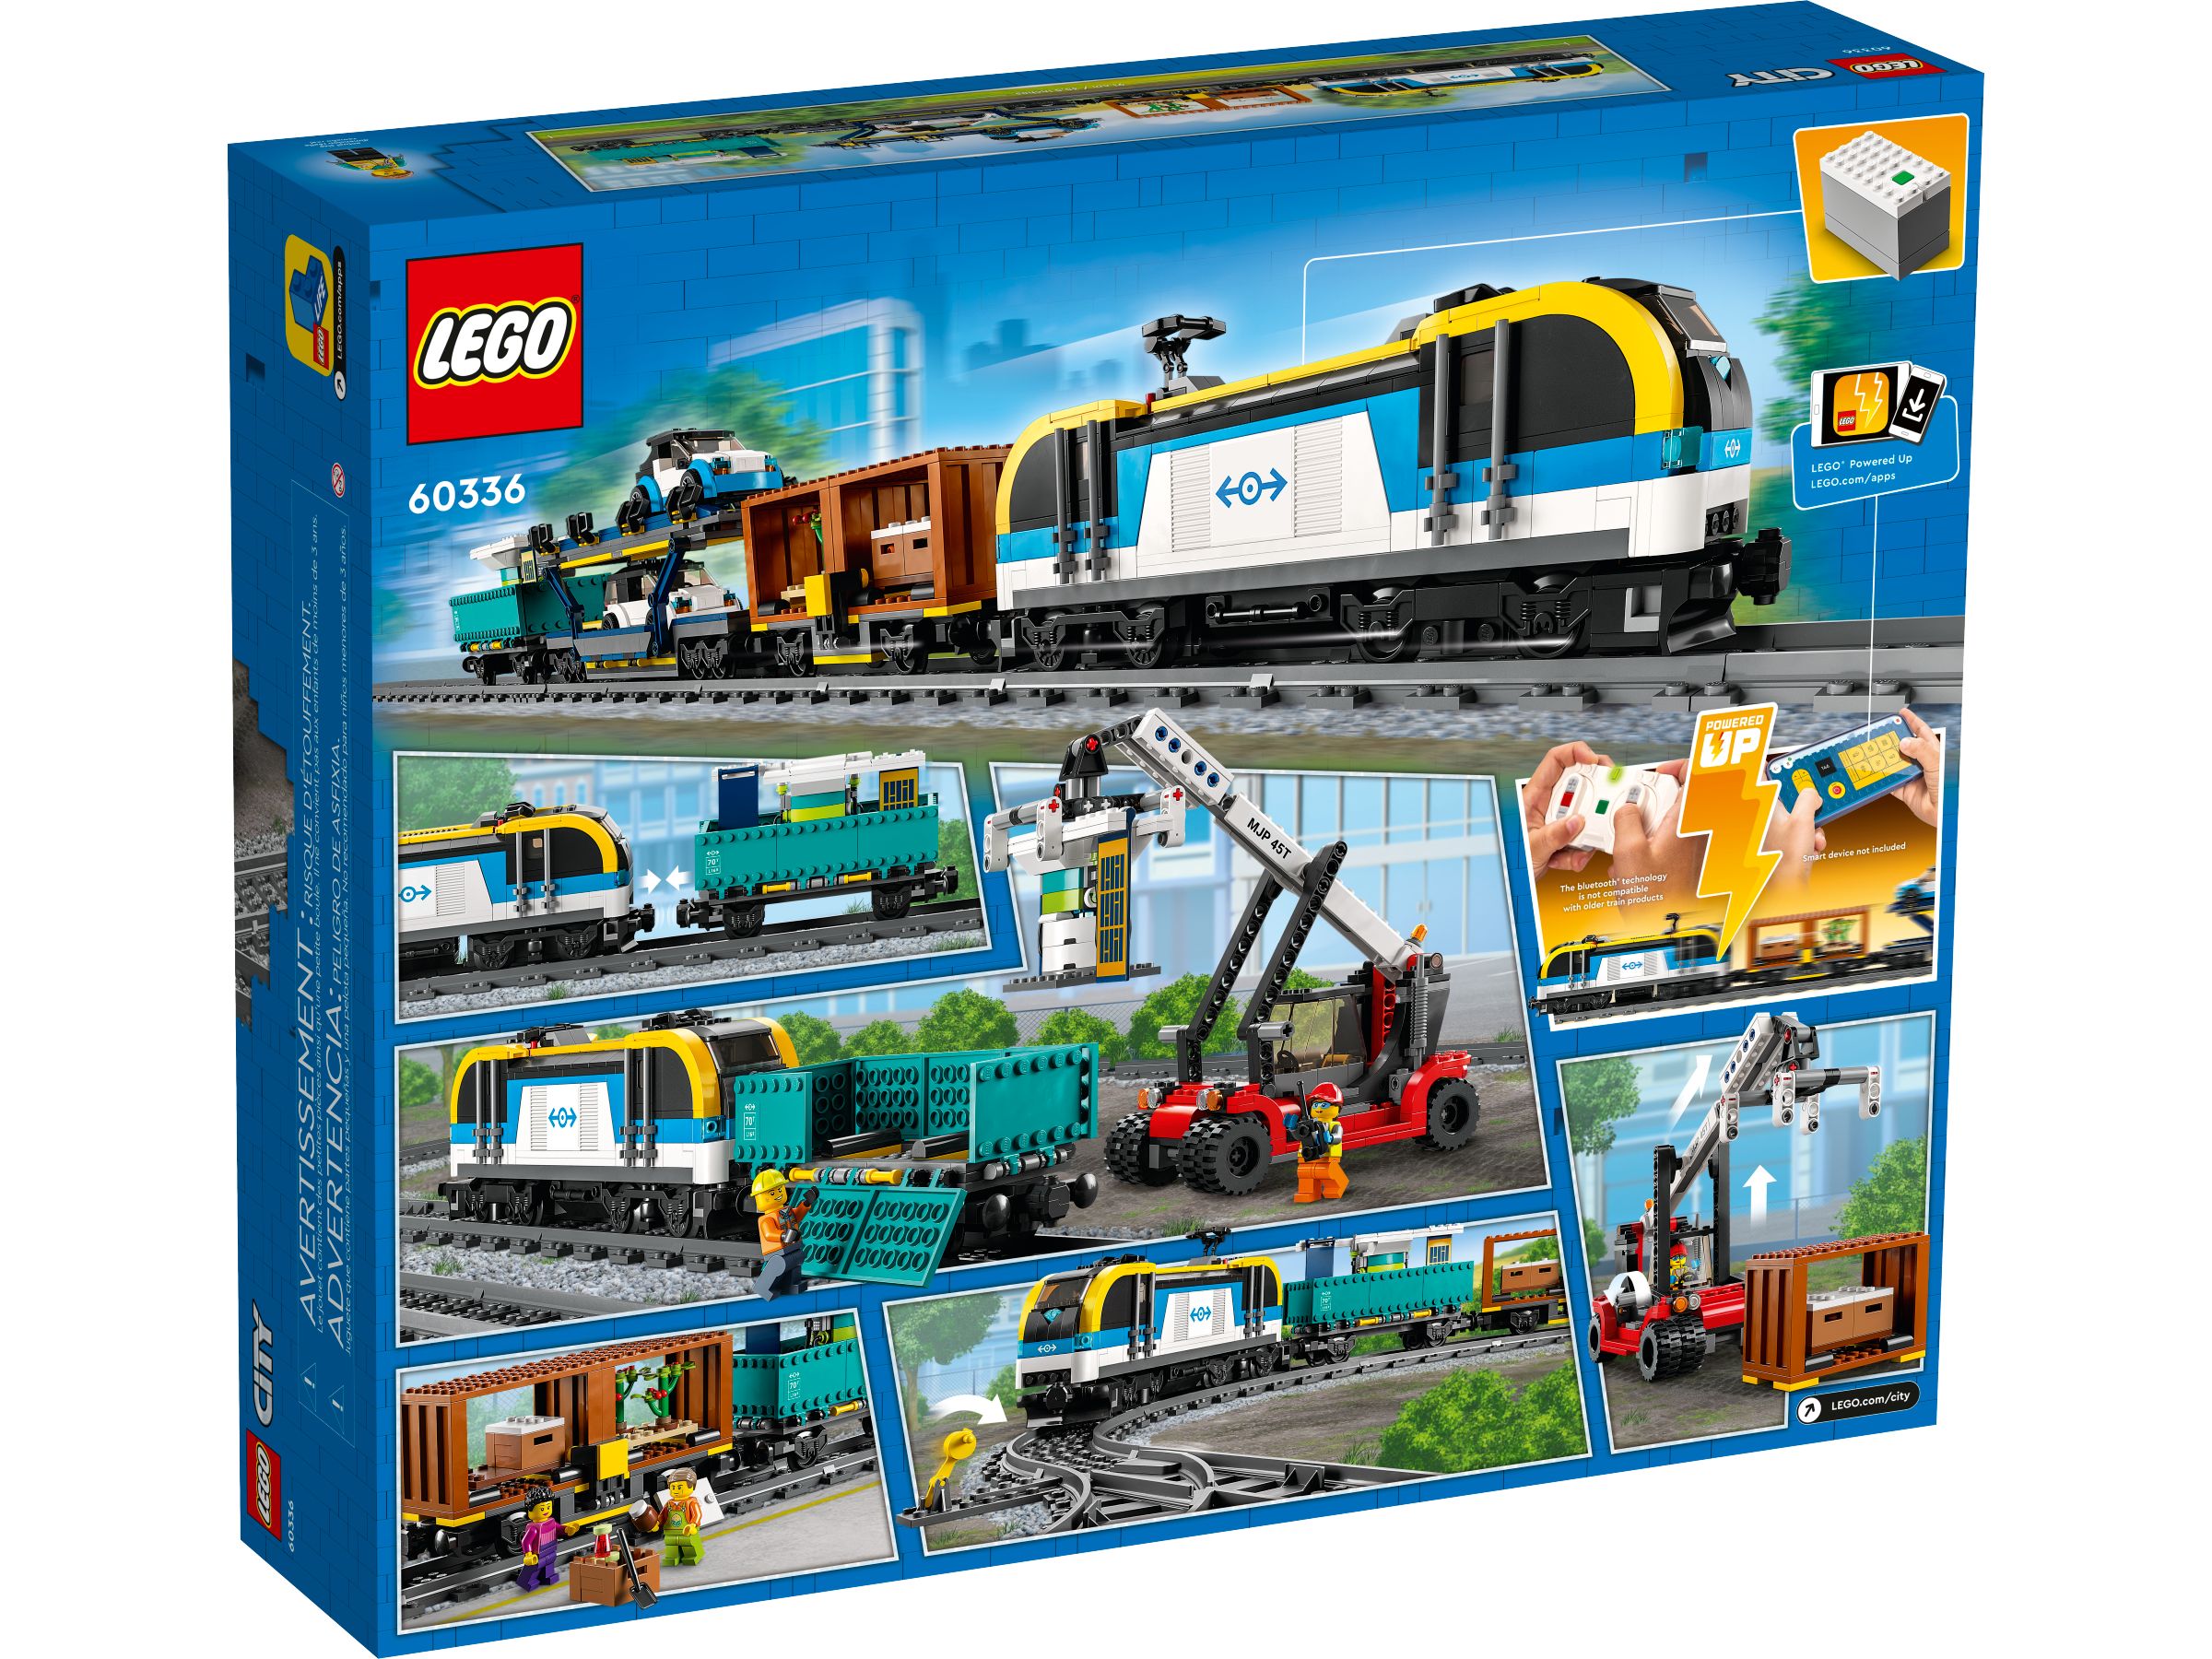 LEGO City 60336 Güterzug LEGO_60336_alt11.jpg